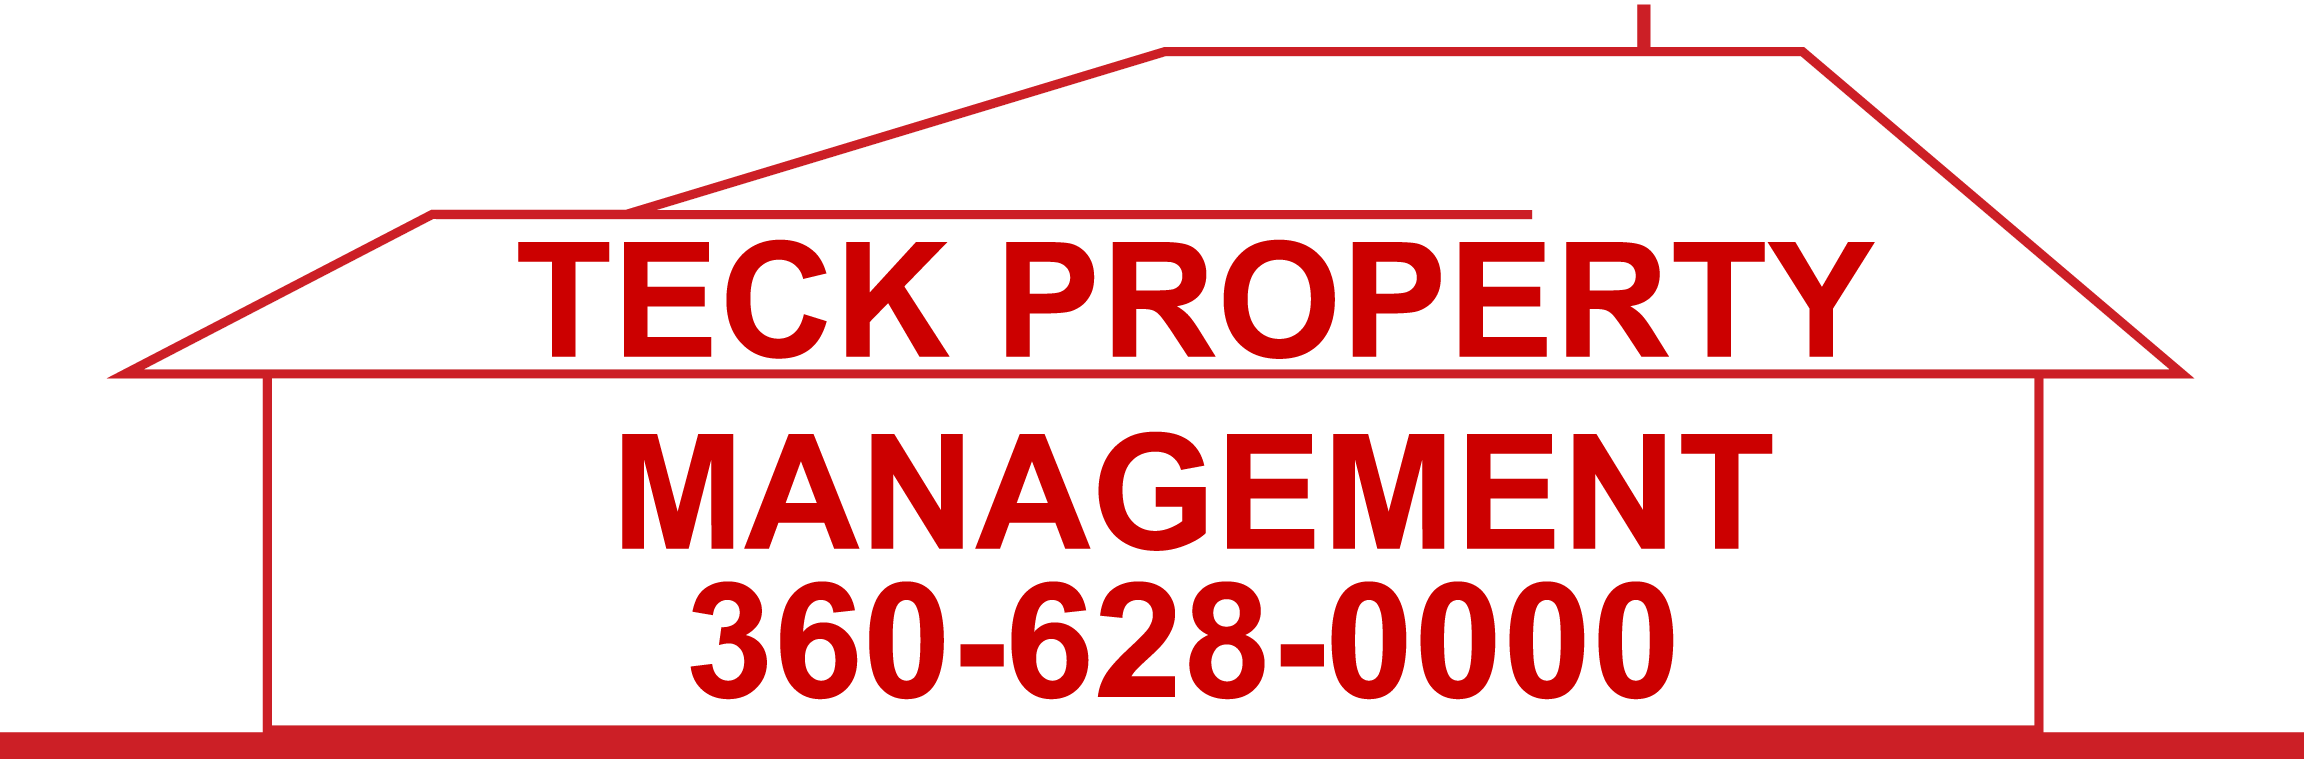 Teck Property Management